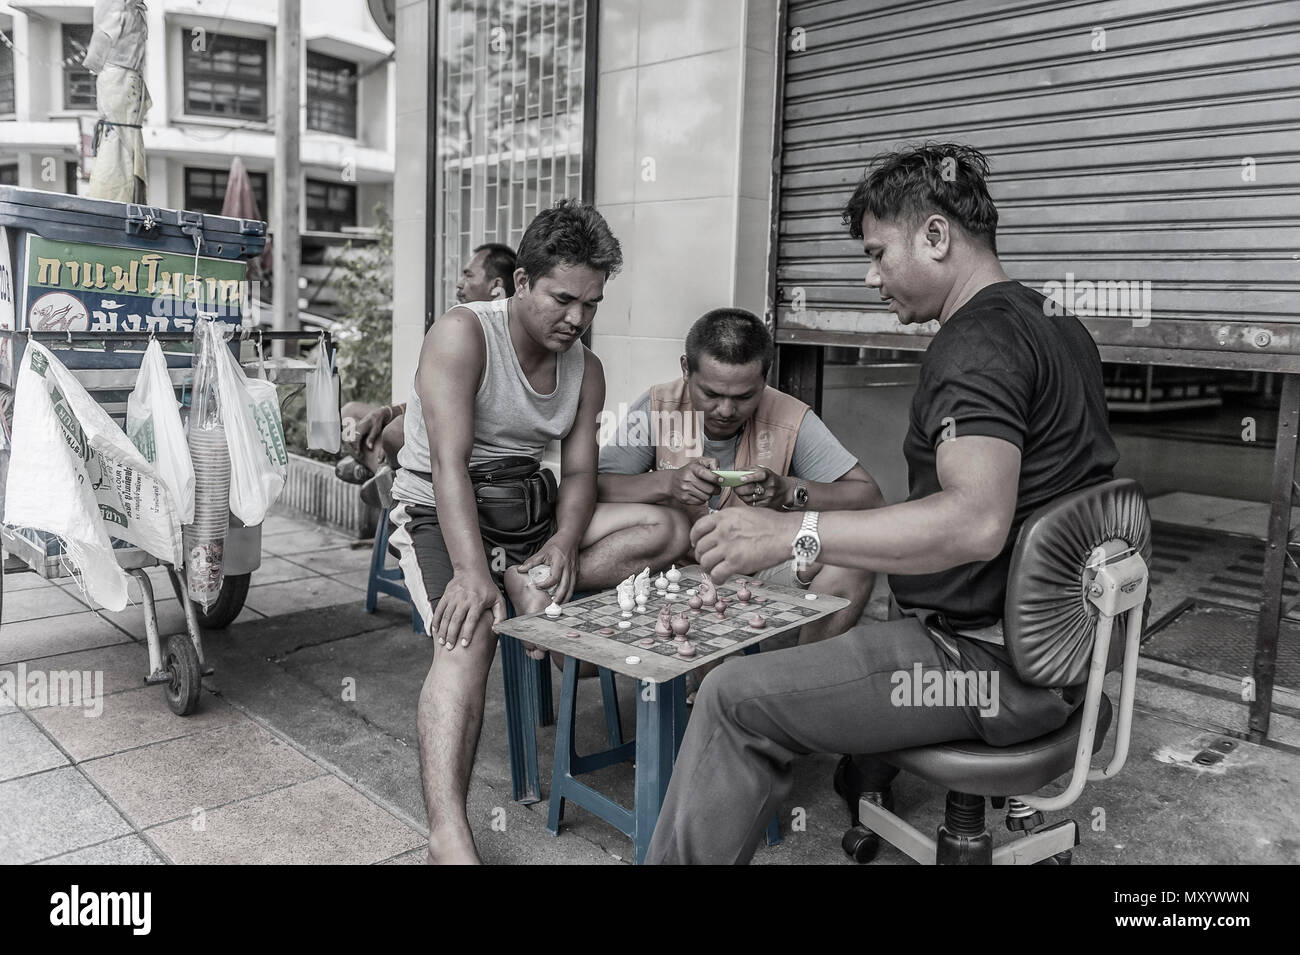 Joueurs d'échecs, Bangkok, Thaïlande Banque D'Images